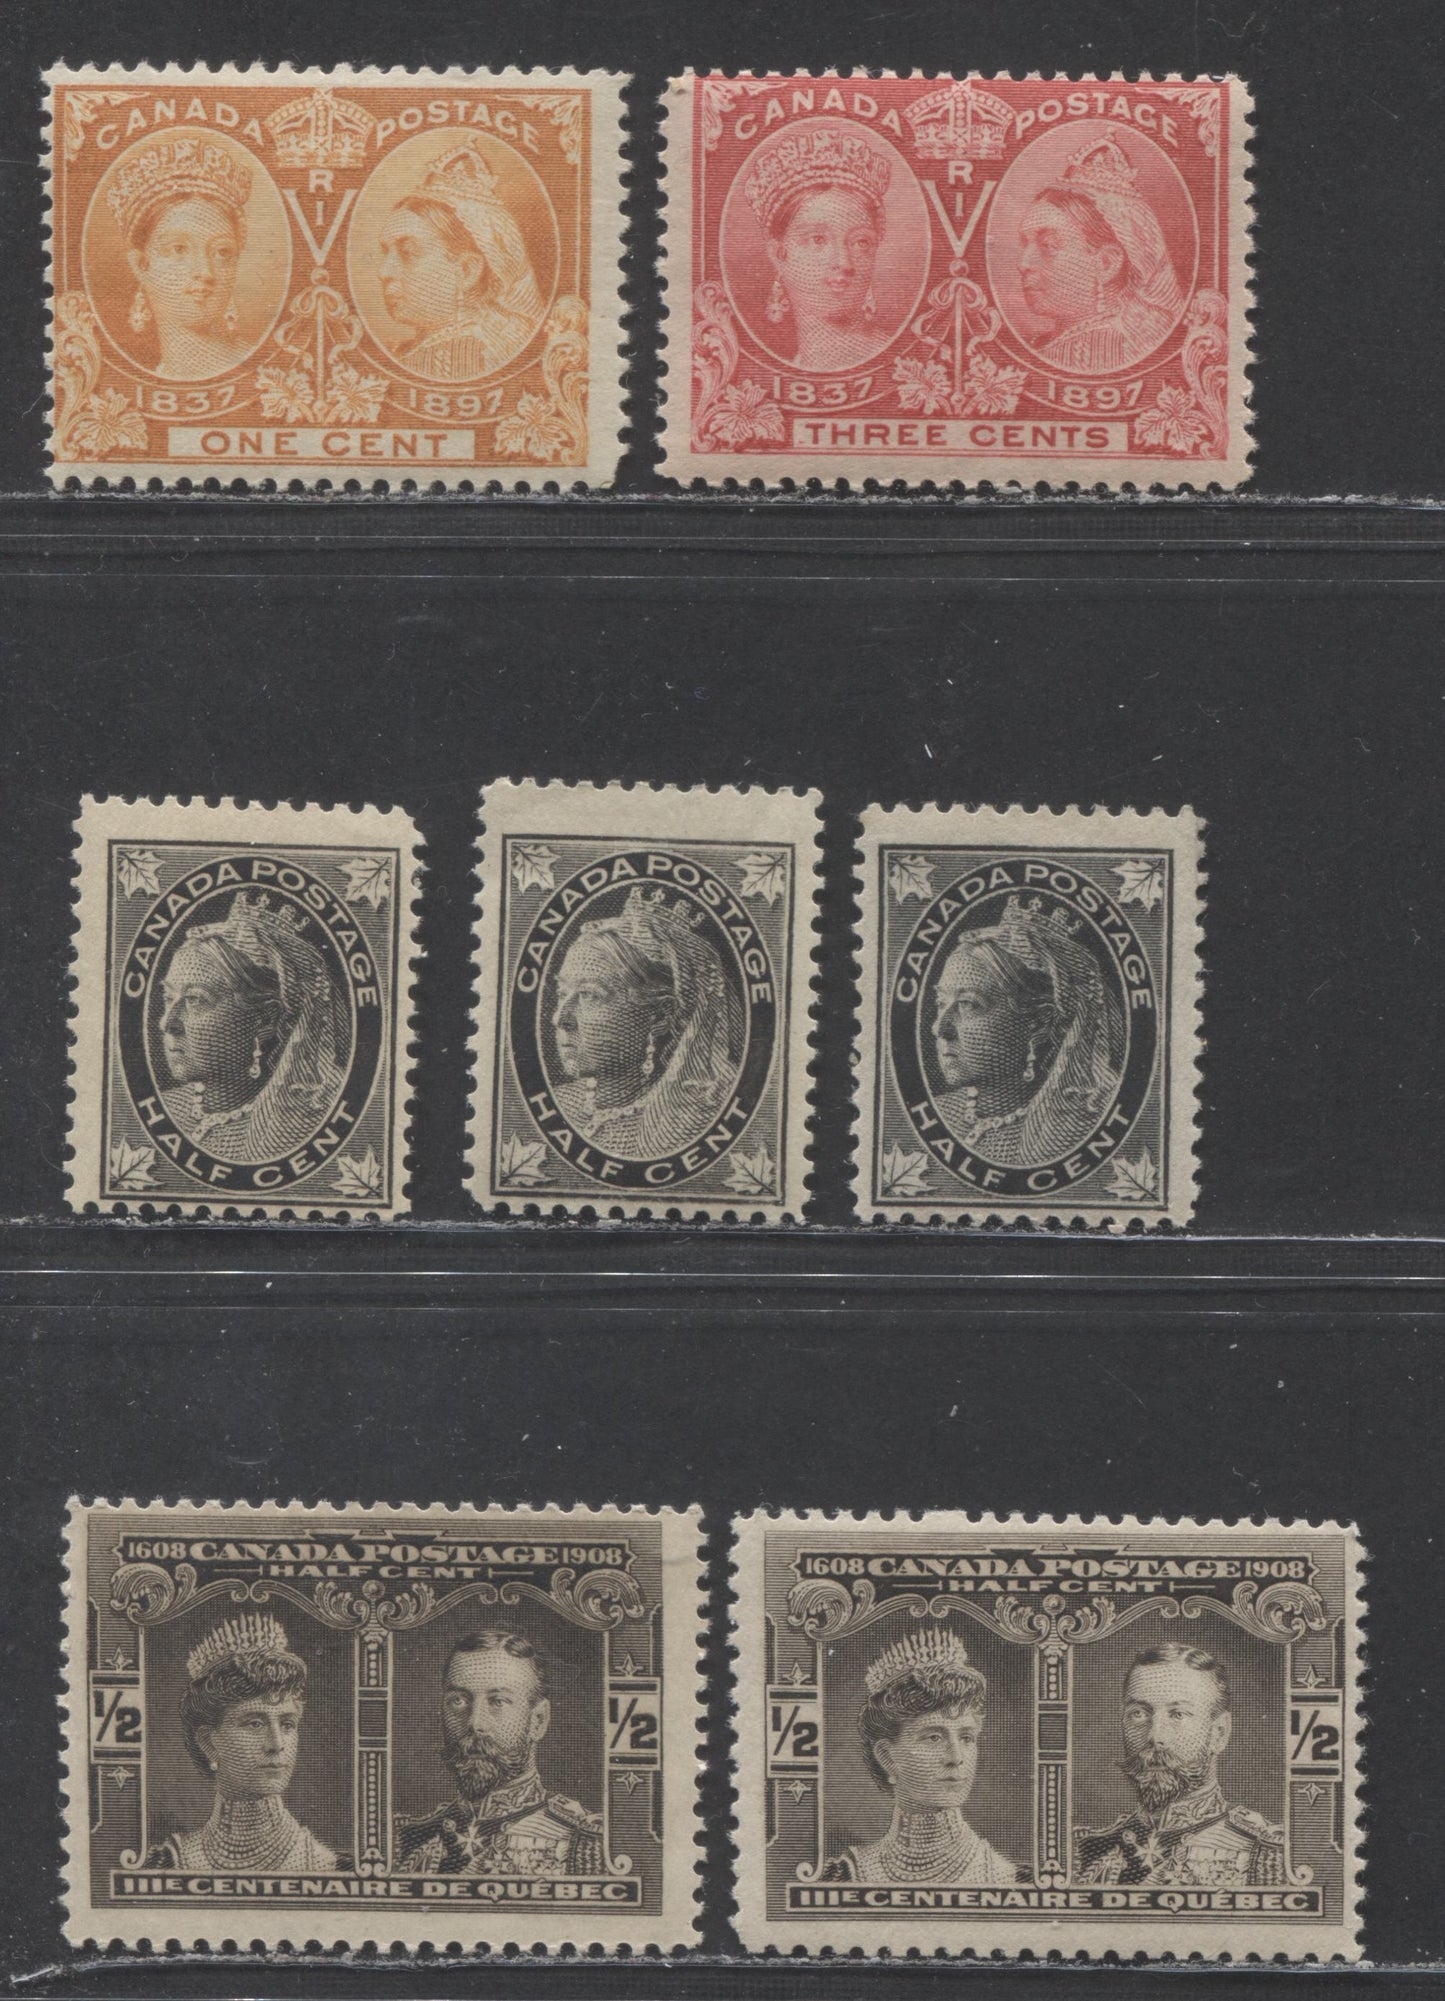 Lot 94 Canada #51, 53, 66, 96 1/2c - 3c Black - Carmine Queen Victoria, 1898-1908 Various Issues, 7 FOG Singles Includes Different Shades